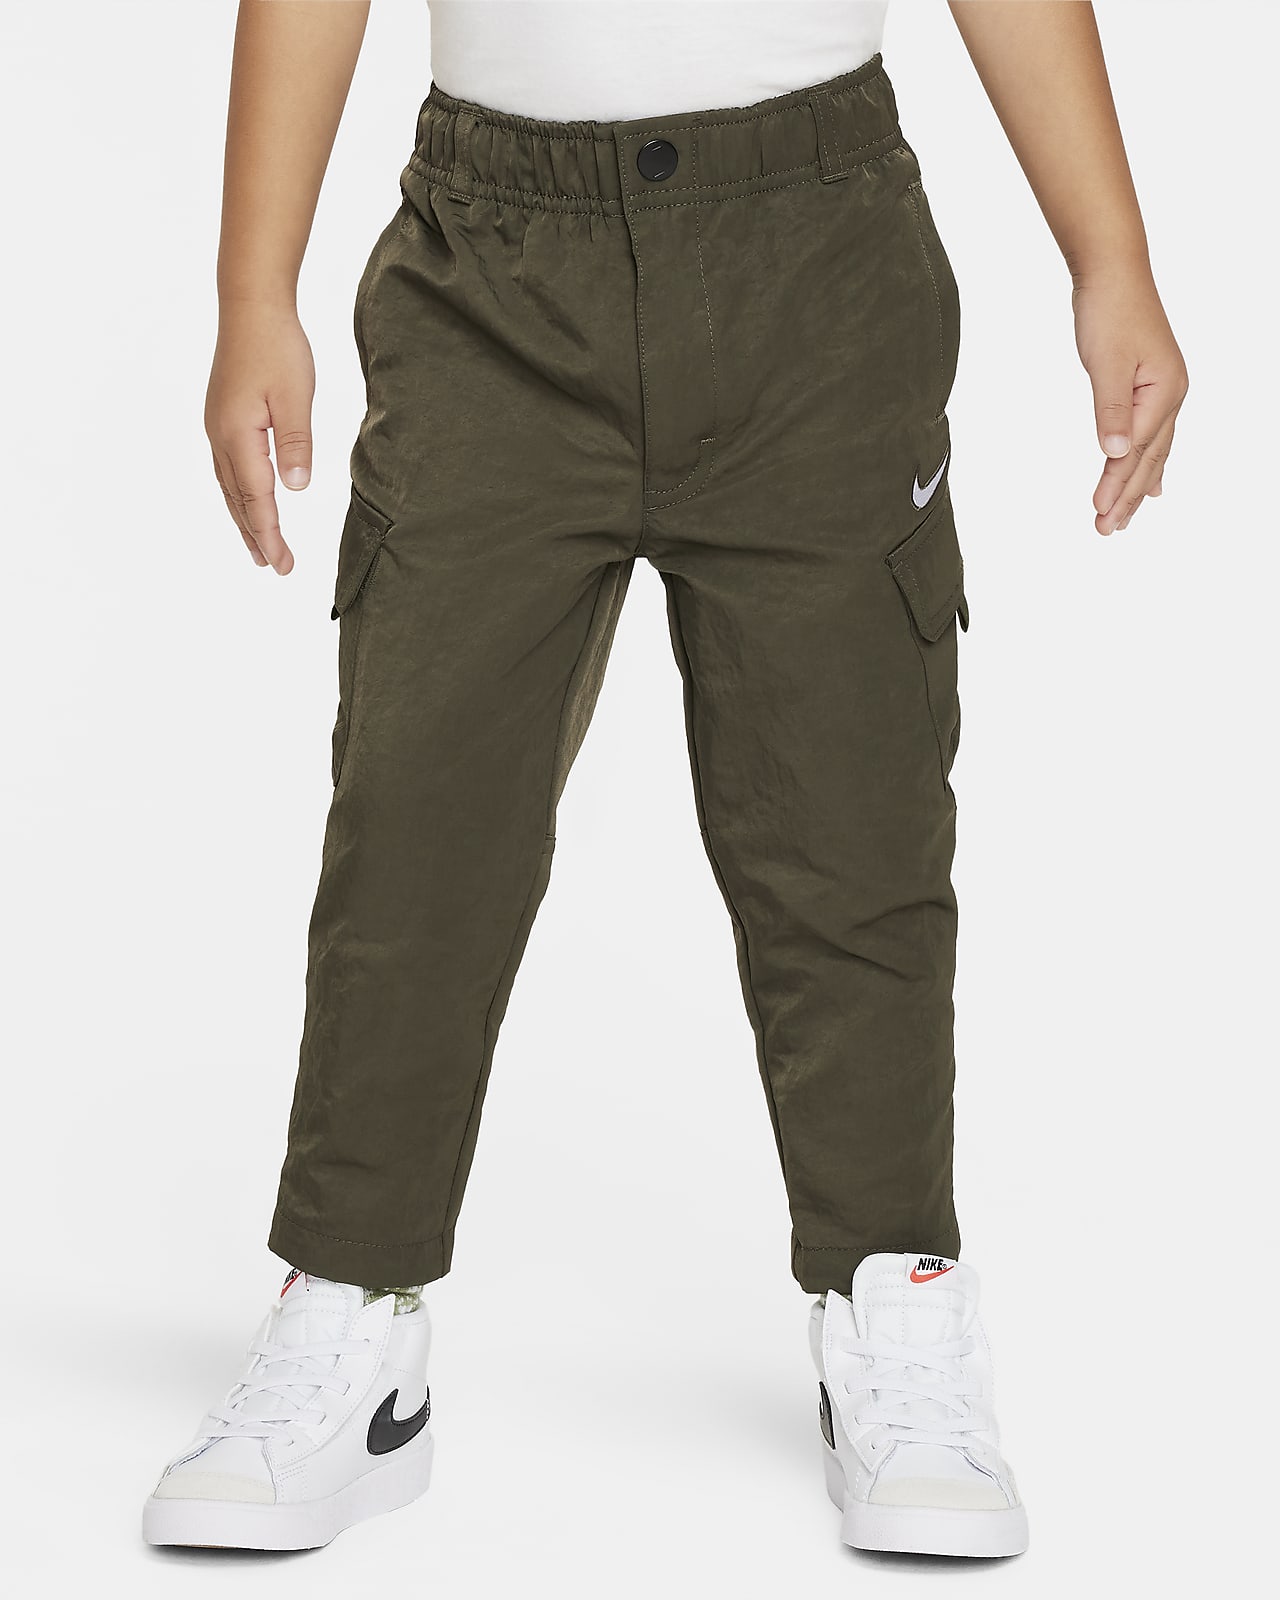 Nike Woven Cargo Pants Toddler Pants.